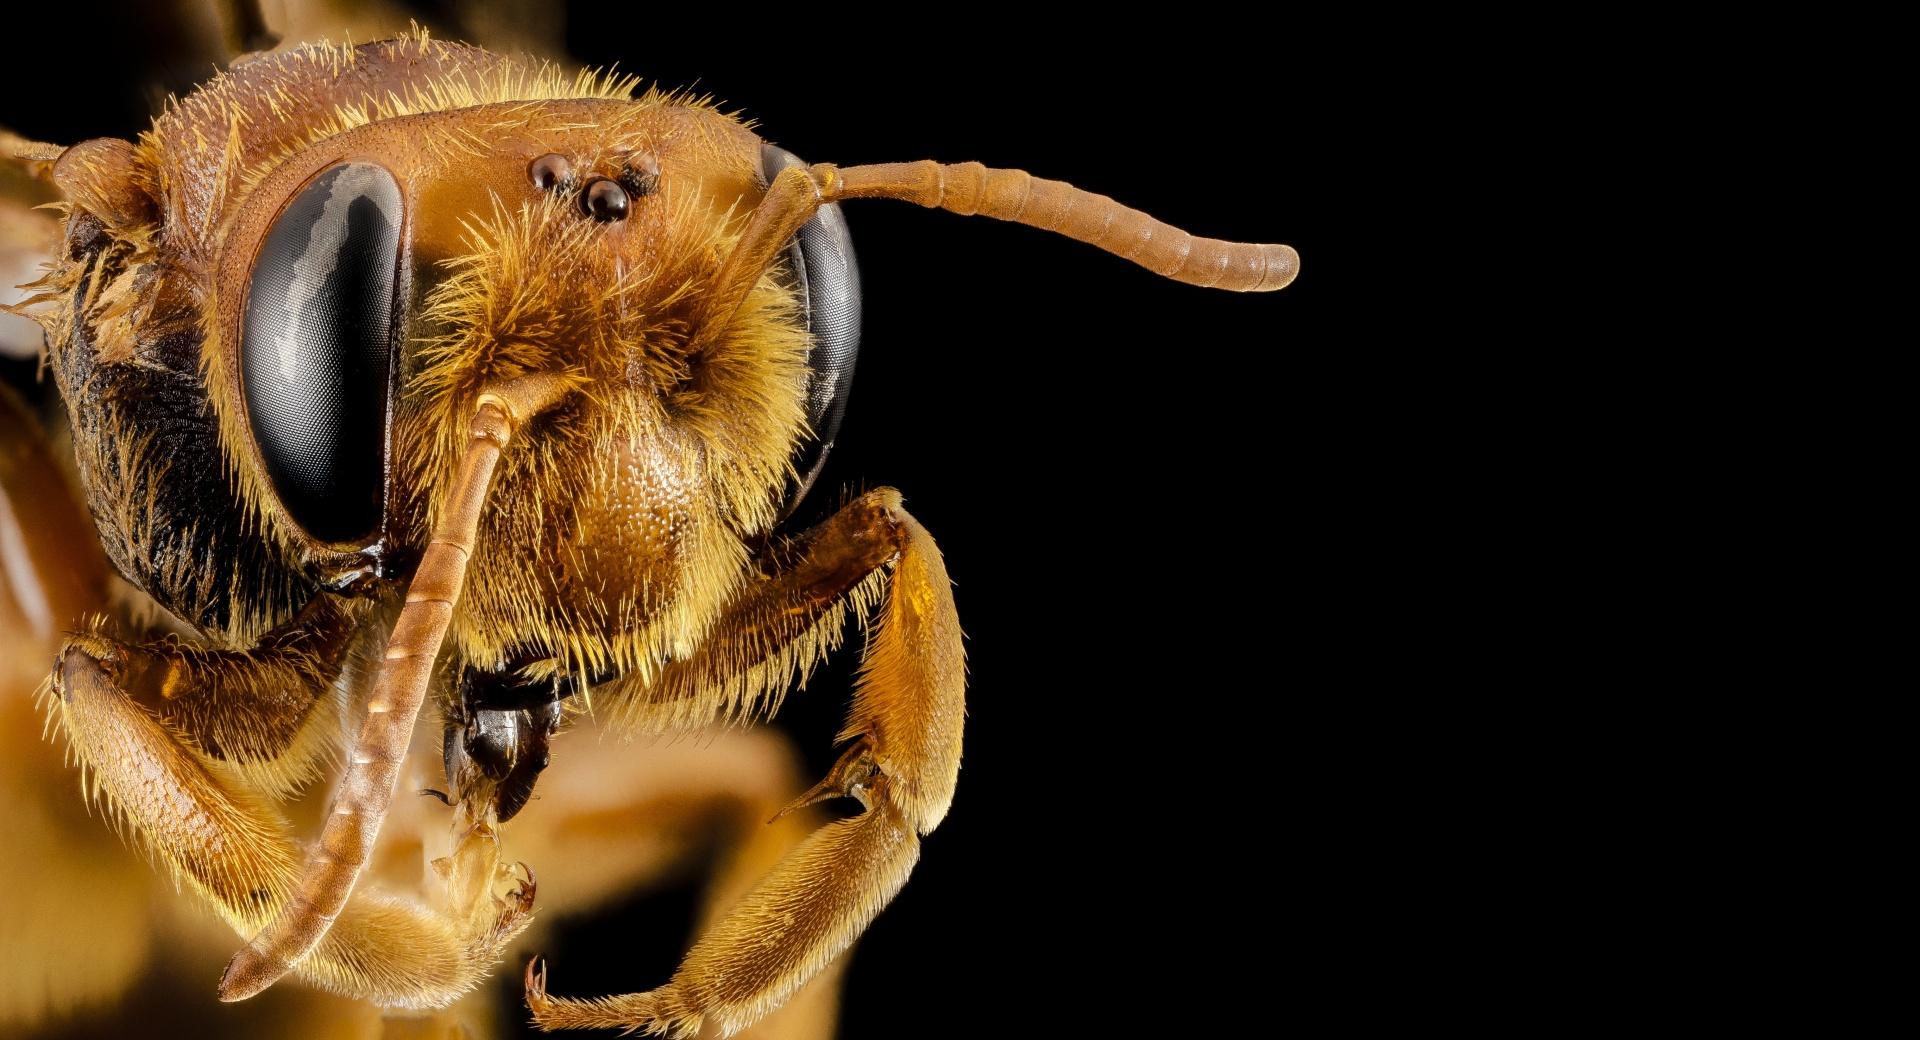 Andrena Bee Head Macro, Oman at 2048 x 2048 iPad size wallpapers HD quality